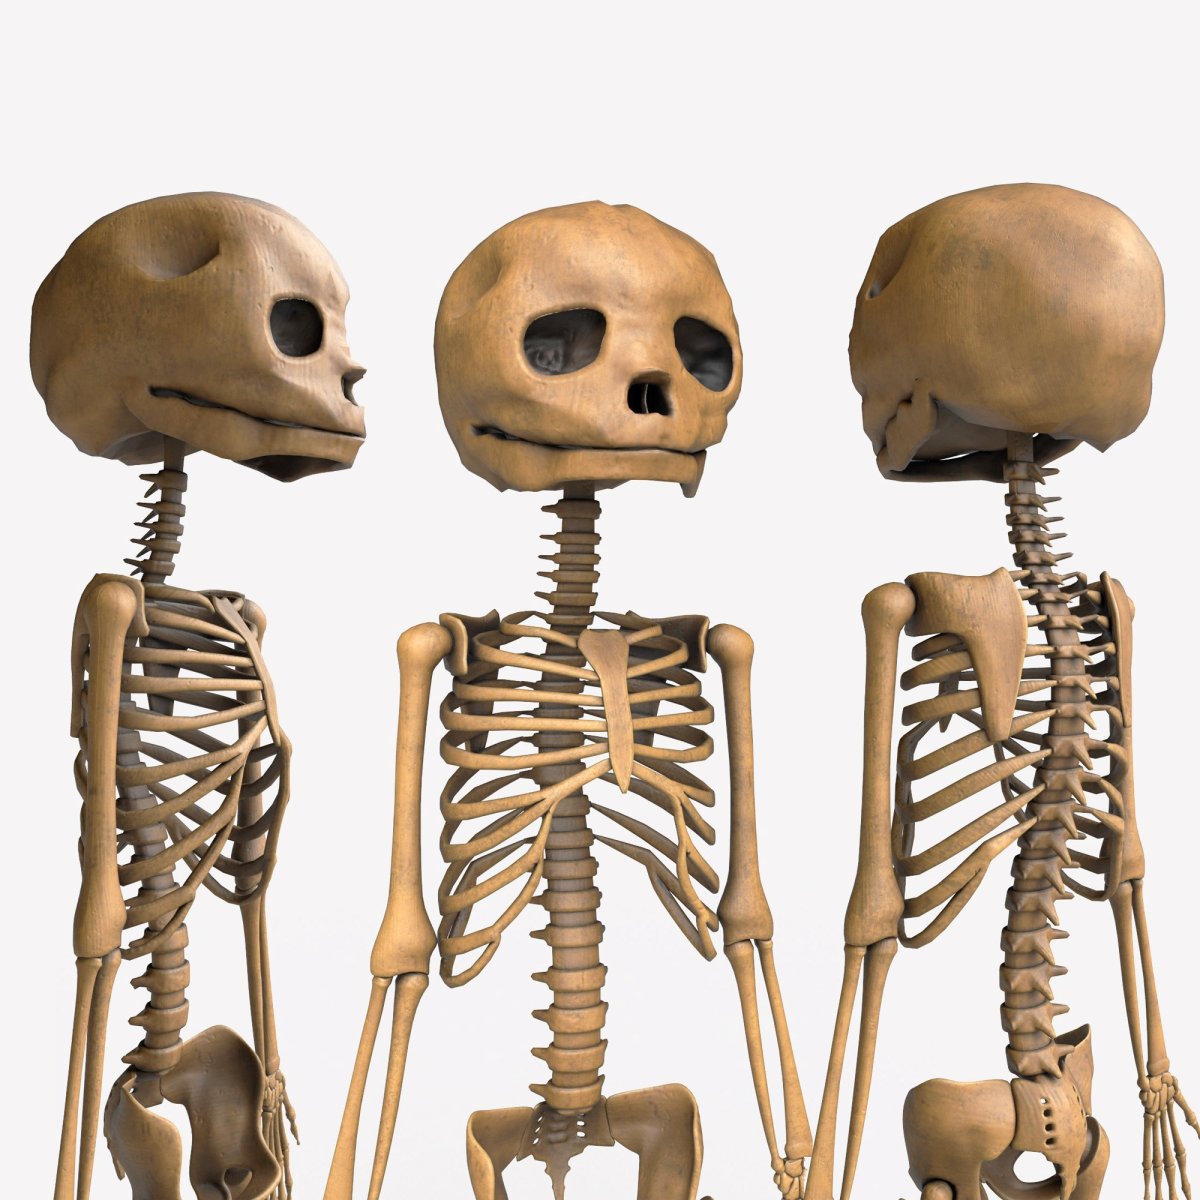 Скелеты